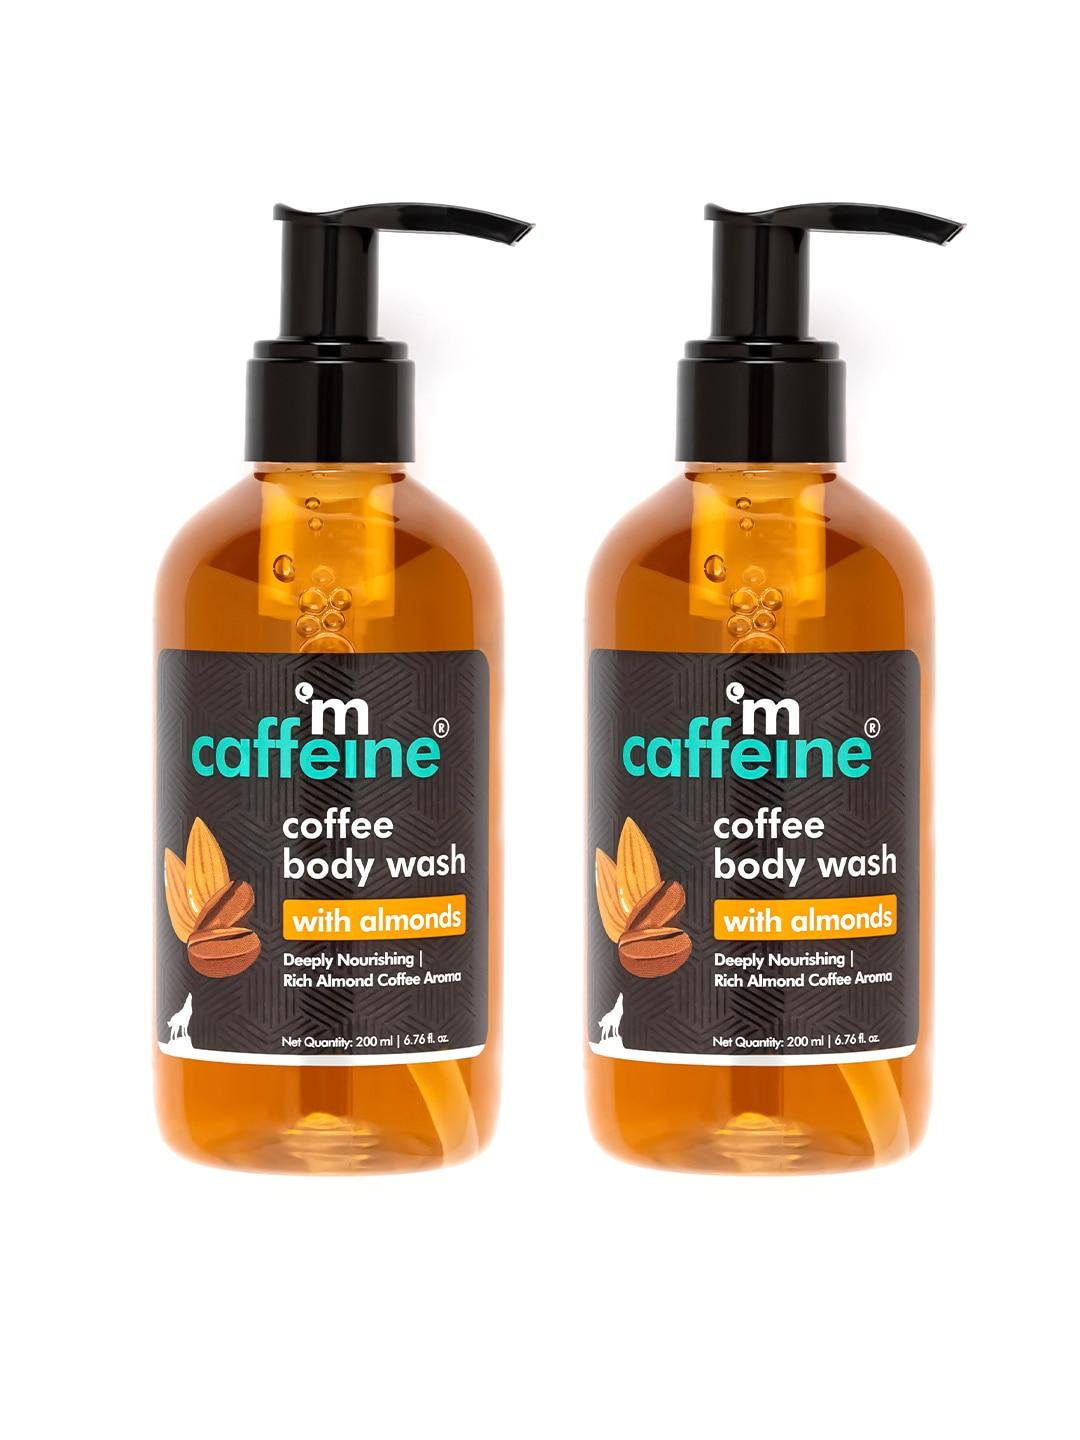 MCaffeine Set of 2 Deeply Nourishing Coffee Body Wash with Almonds - 200 ml each